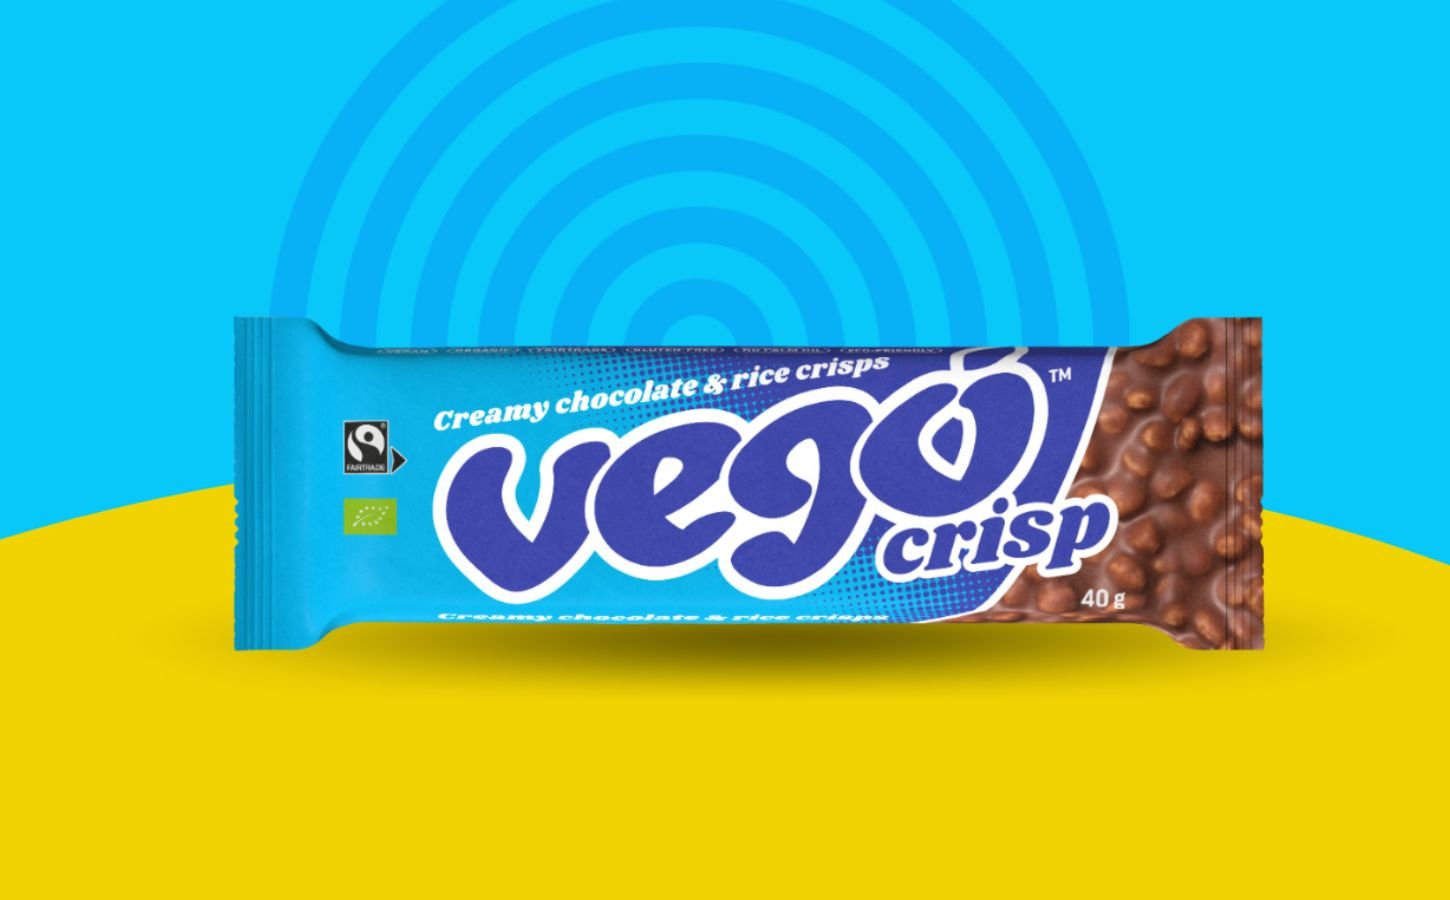 VEGO has released a new vegan chocolate bar, the VEGO Crisp